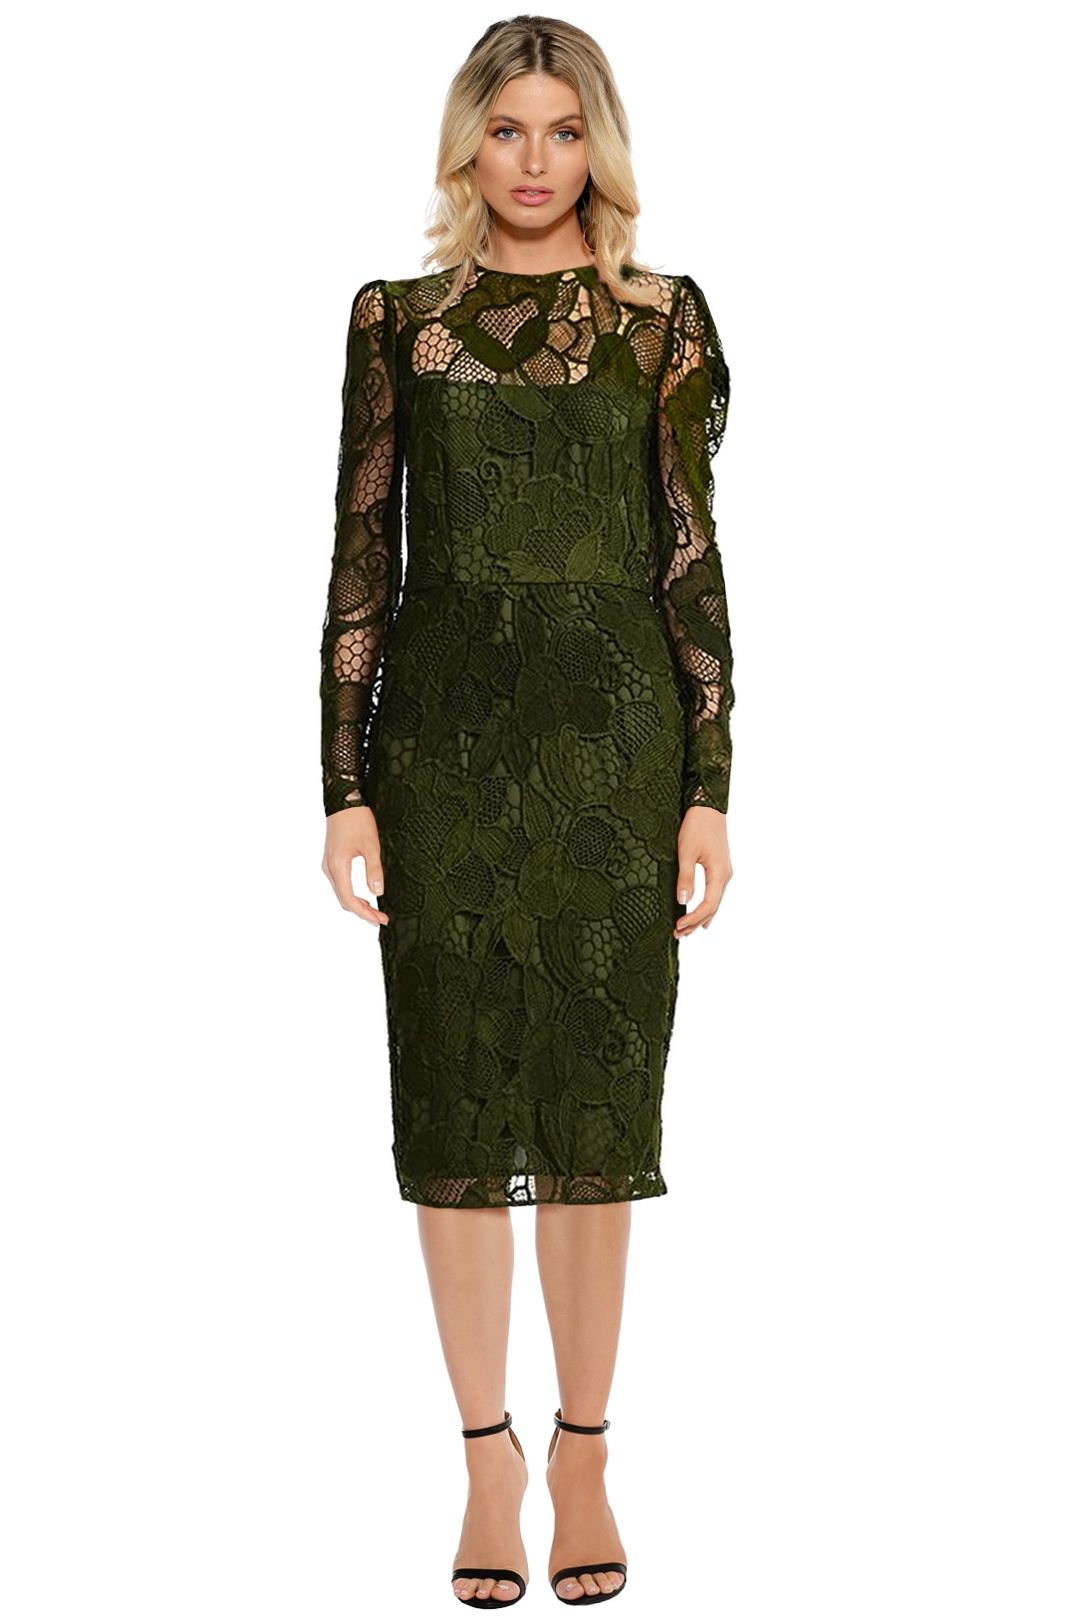 Cooper St - Cast Away Lace Dress - Dark Green - Front